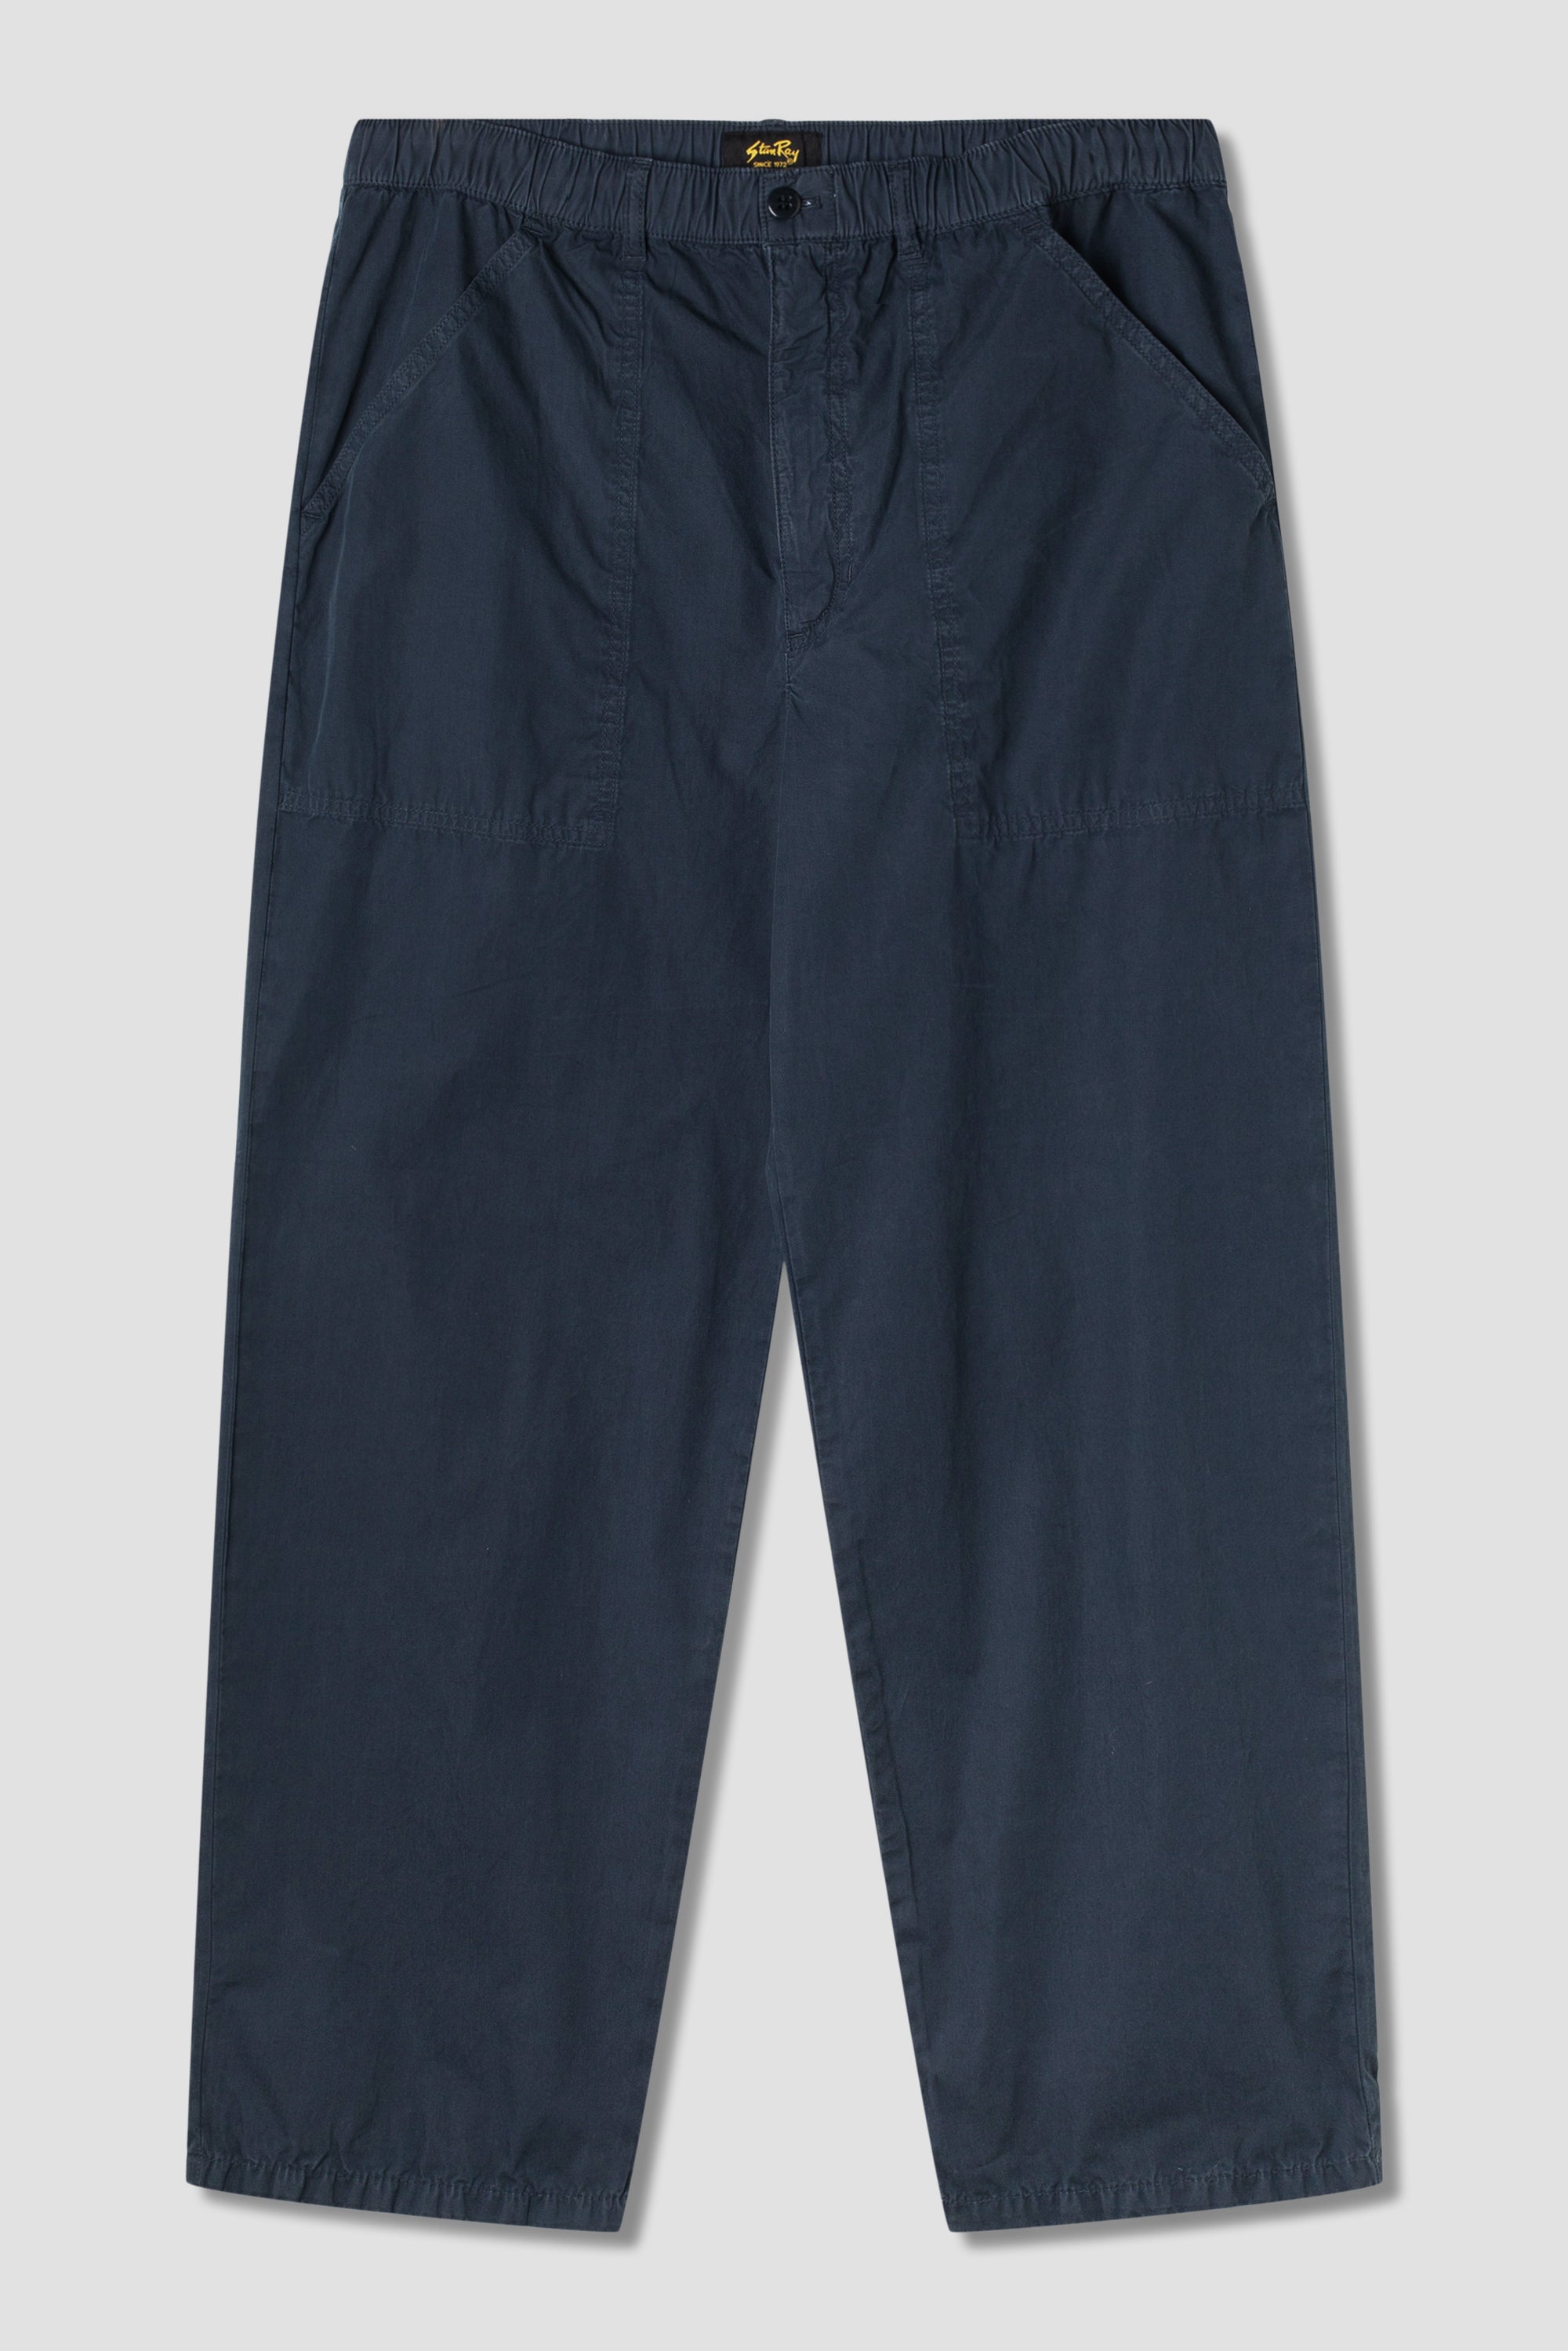 Pantaloni da giungla blu scuro